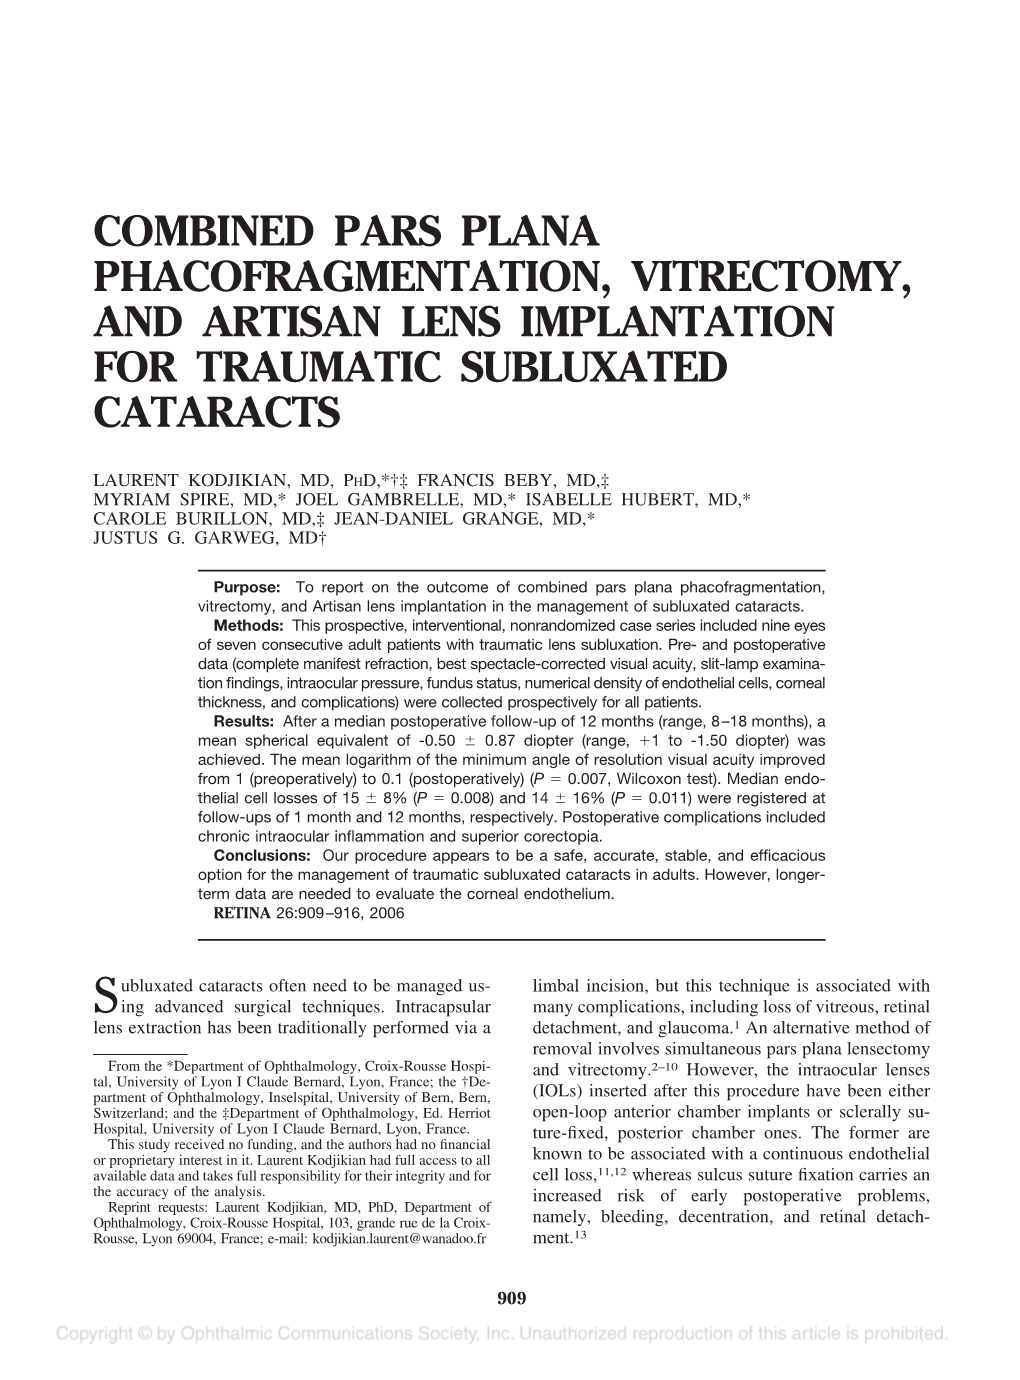 Combined Pars Plana Phacofragmentation, Vitrectomy, and Artisan Lens Implantation for Traumatic Subluxated Cataracts